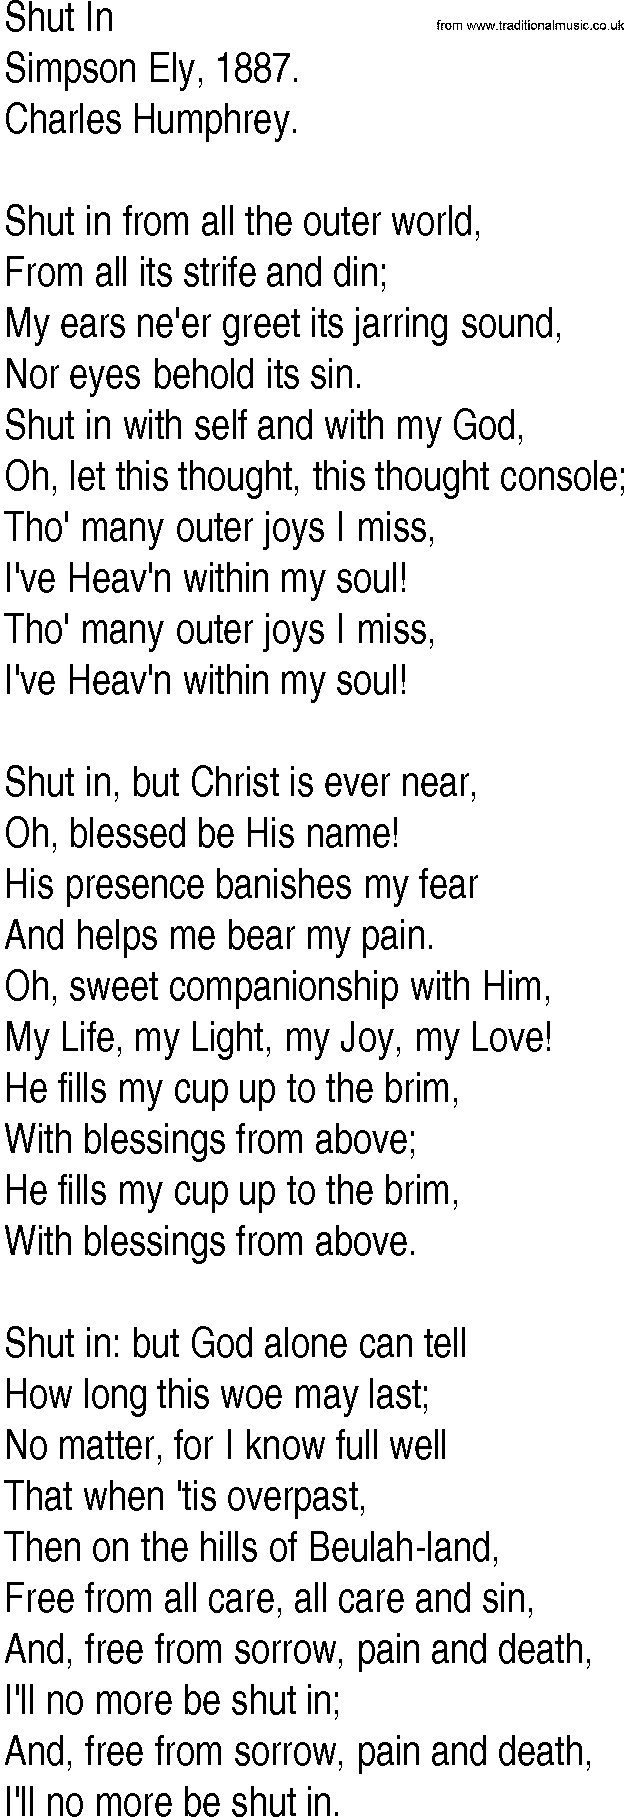 Hymn and Gospel Song: Shut In by Simpson Ely lyrics